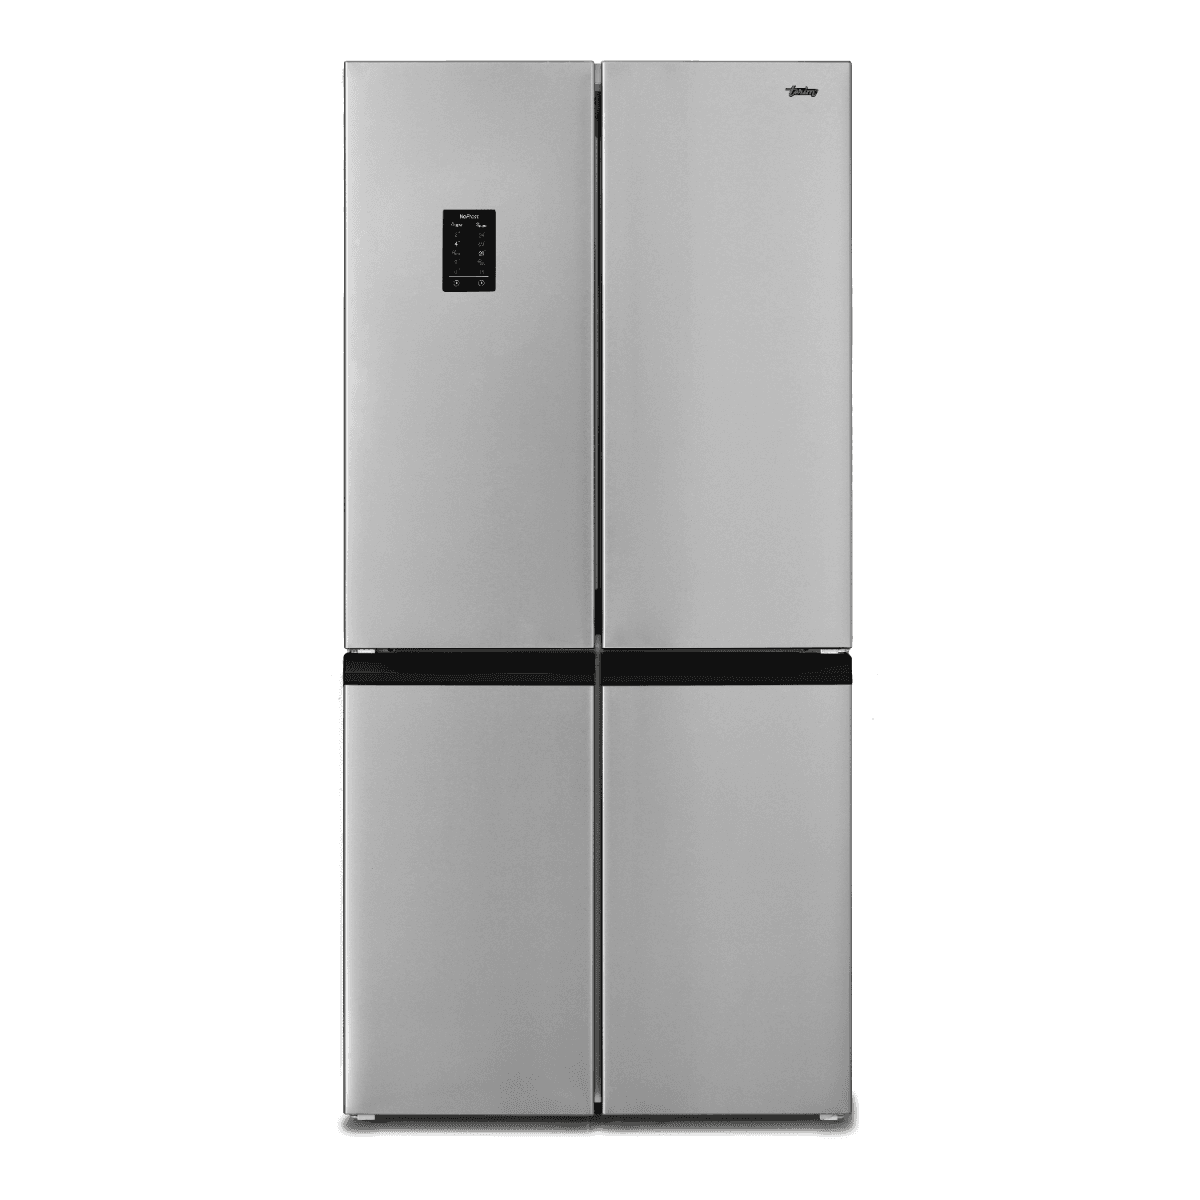 Terim French 4 Door Bottom Freezer Refrigerator, 700 L, TERBF700FDVS